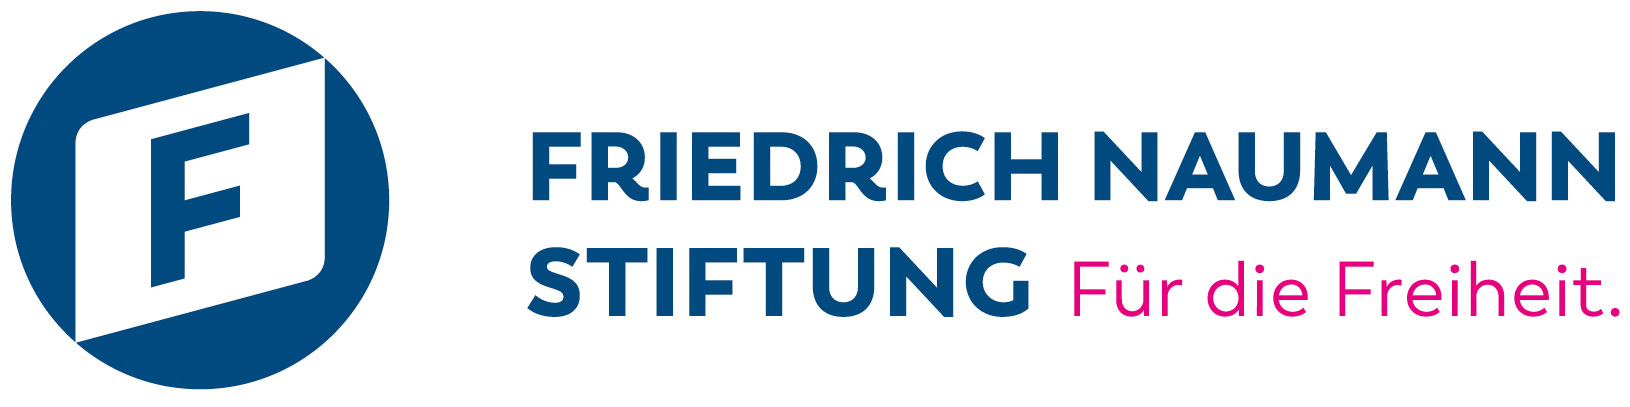 Friedrich-Naumann Foundation (FNF)